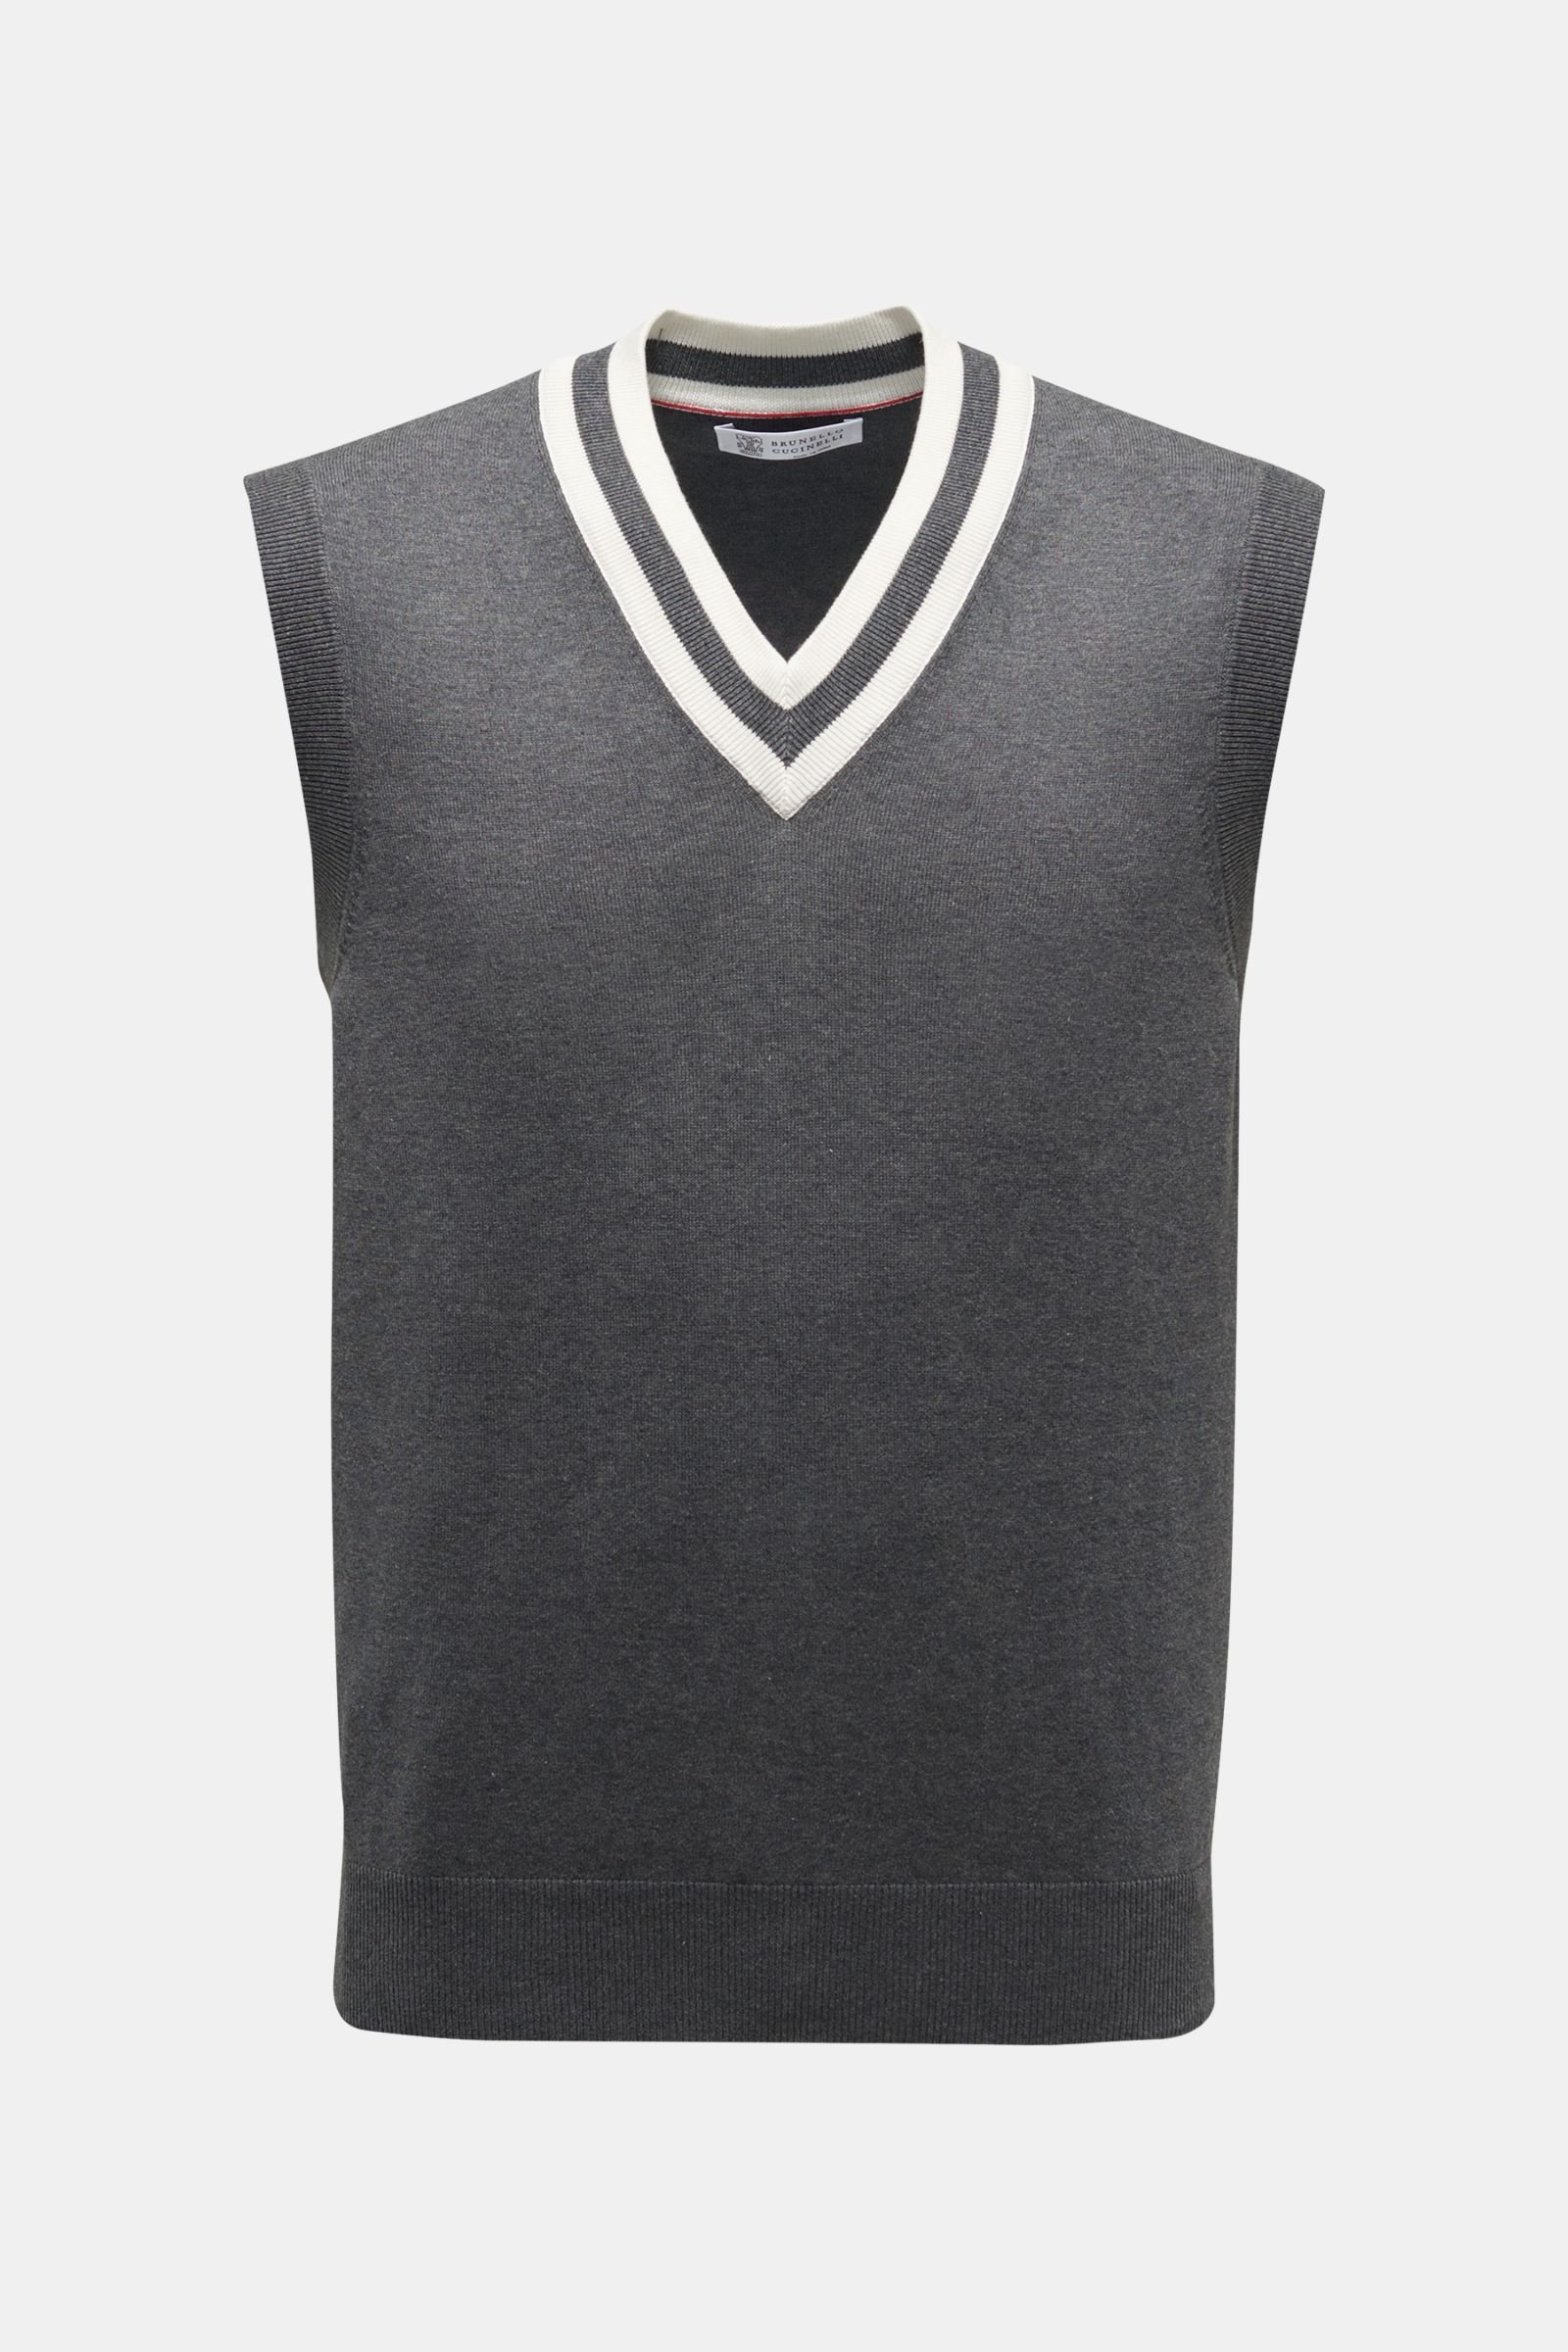 V-neck sweater vest dark grey/off-white